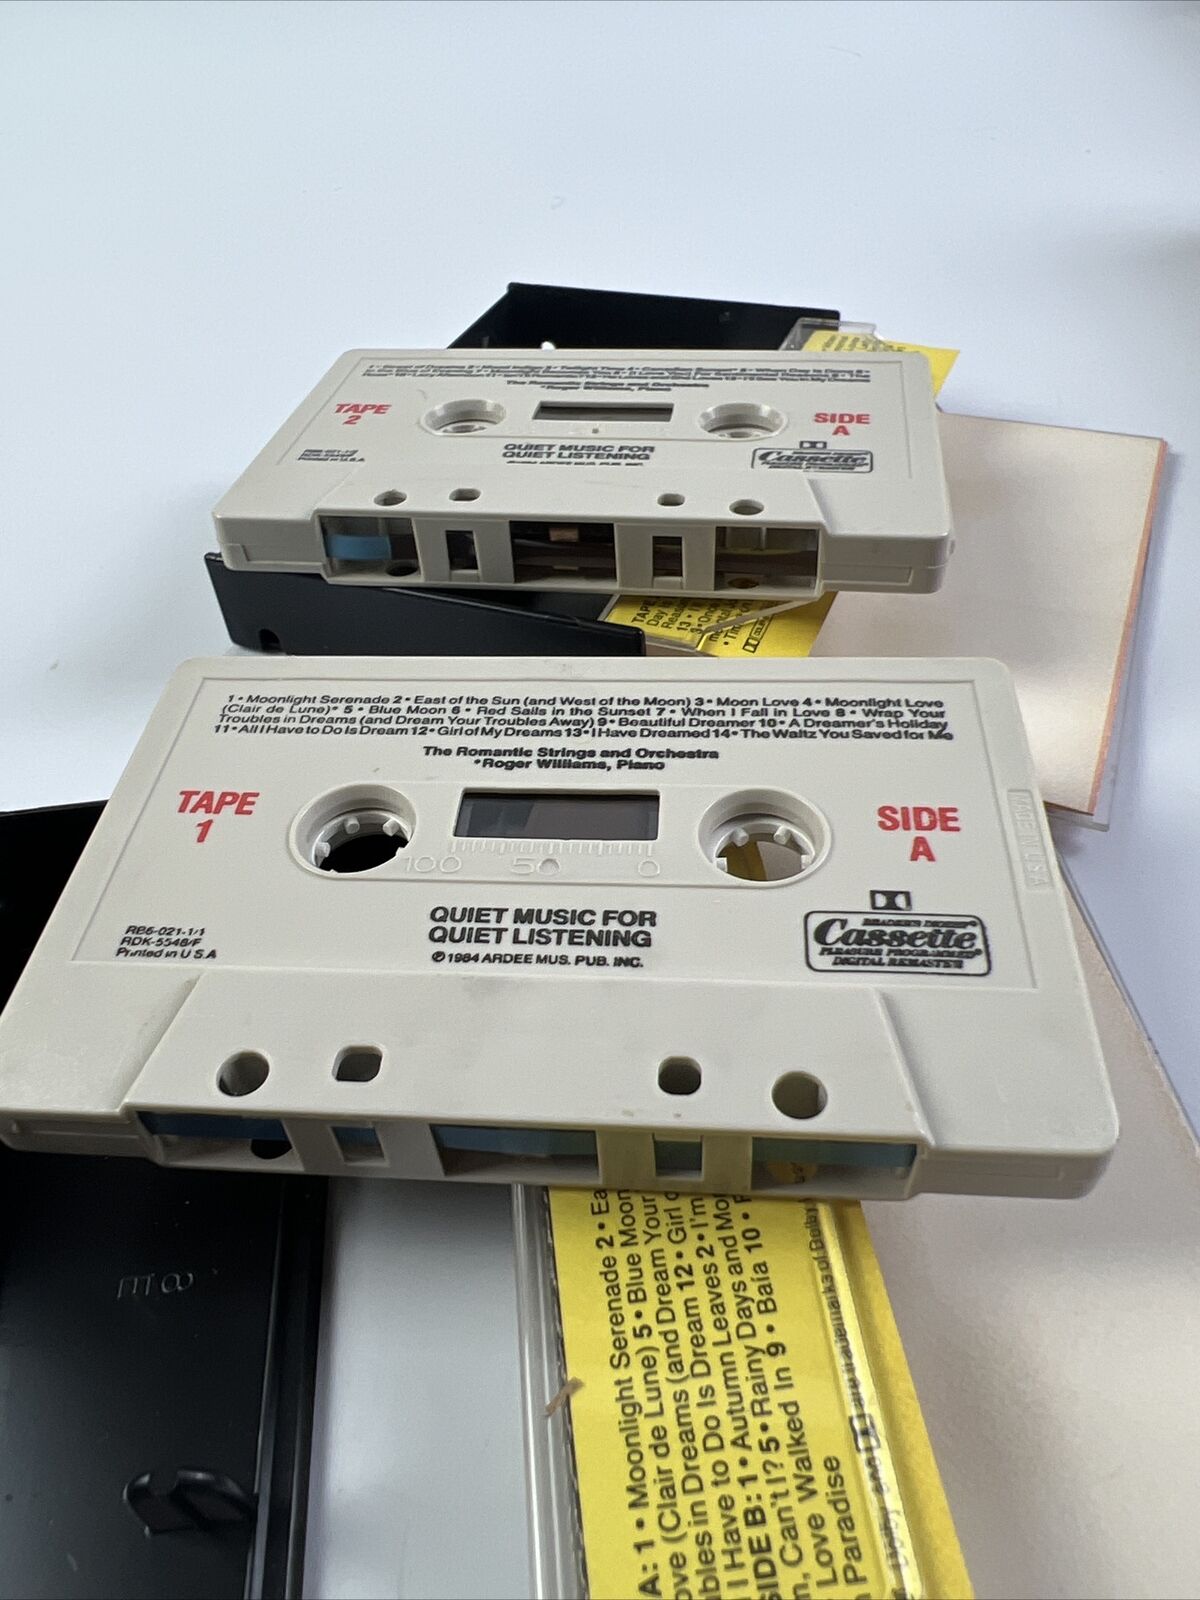 Quiet Music For Quiet Listening Cassette- 1985 Readers Digest- Tape 1 & 2